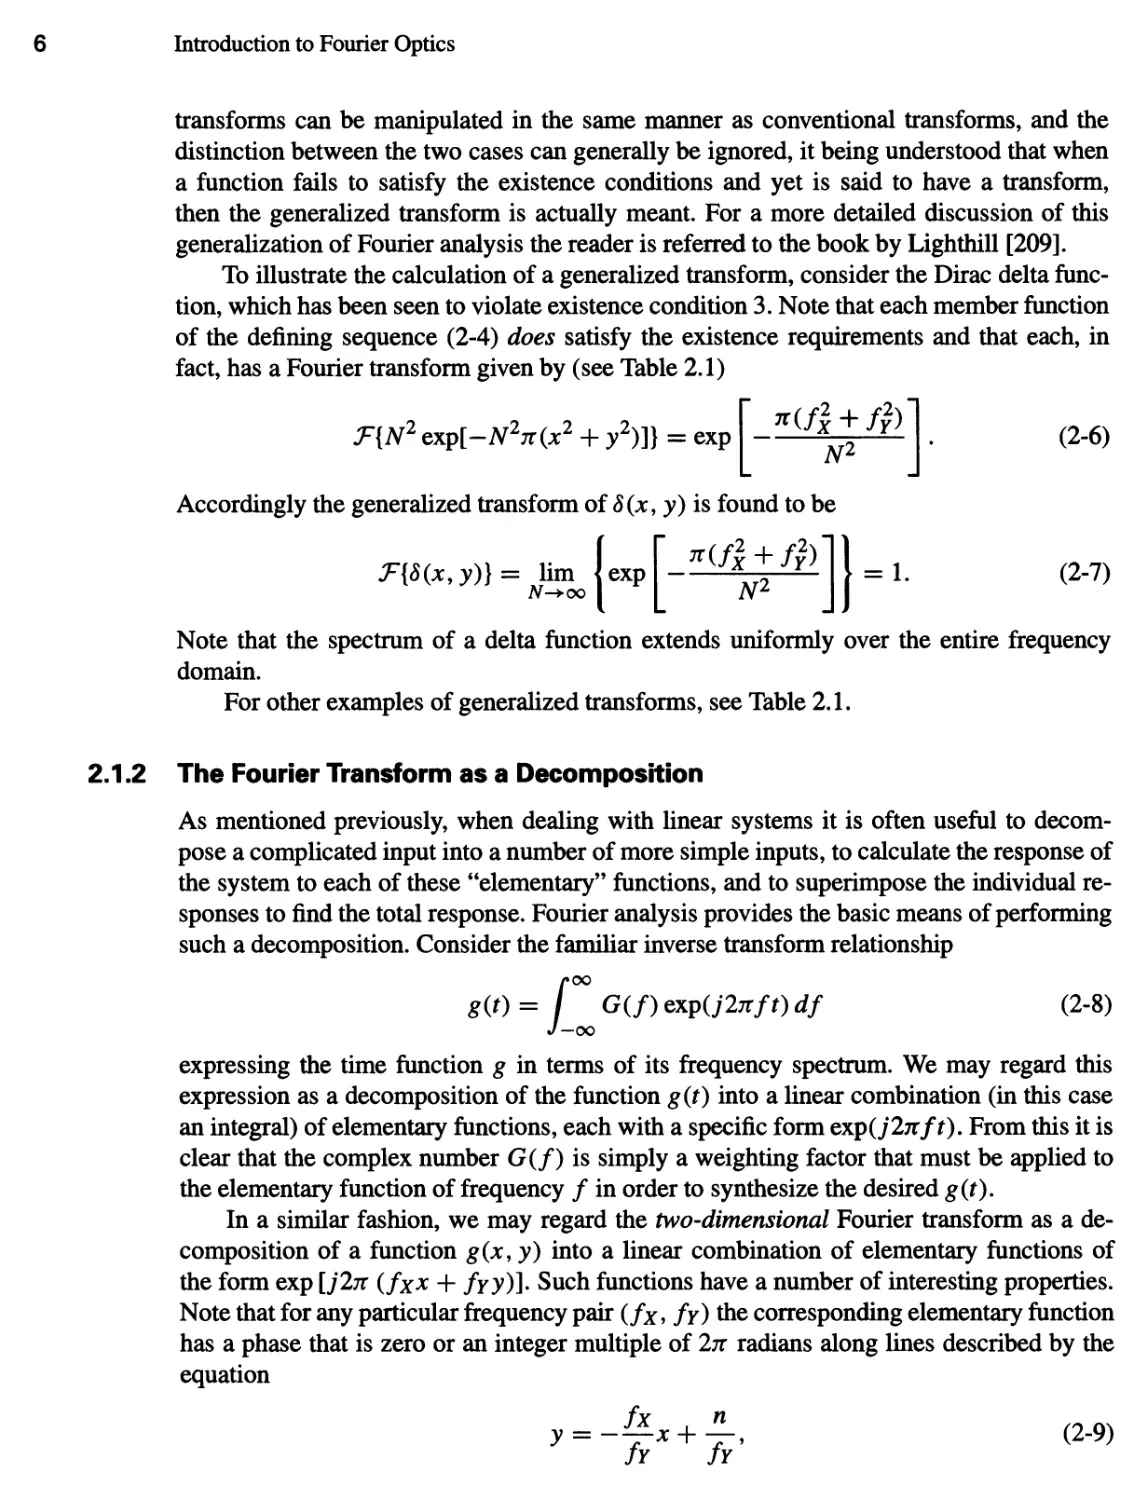 2.1.2 The Fourier Transform as a Decomposition 6